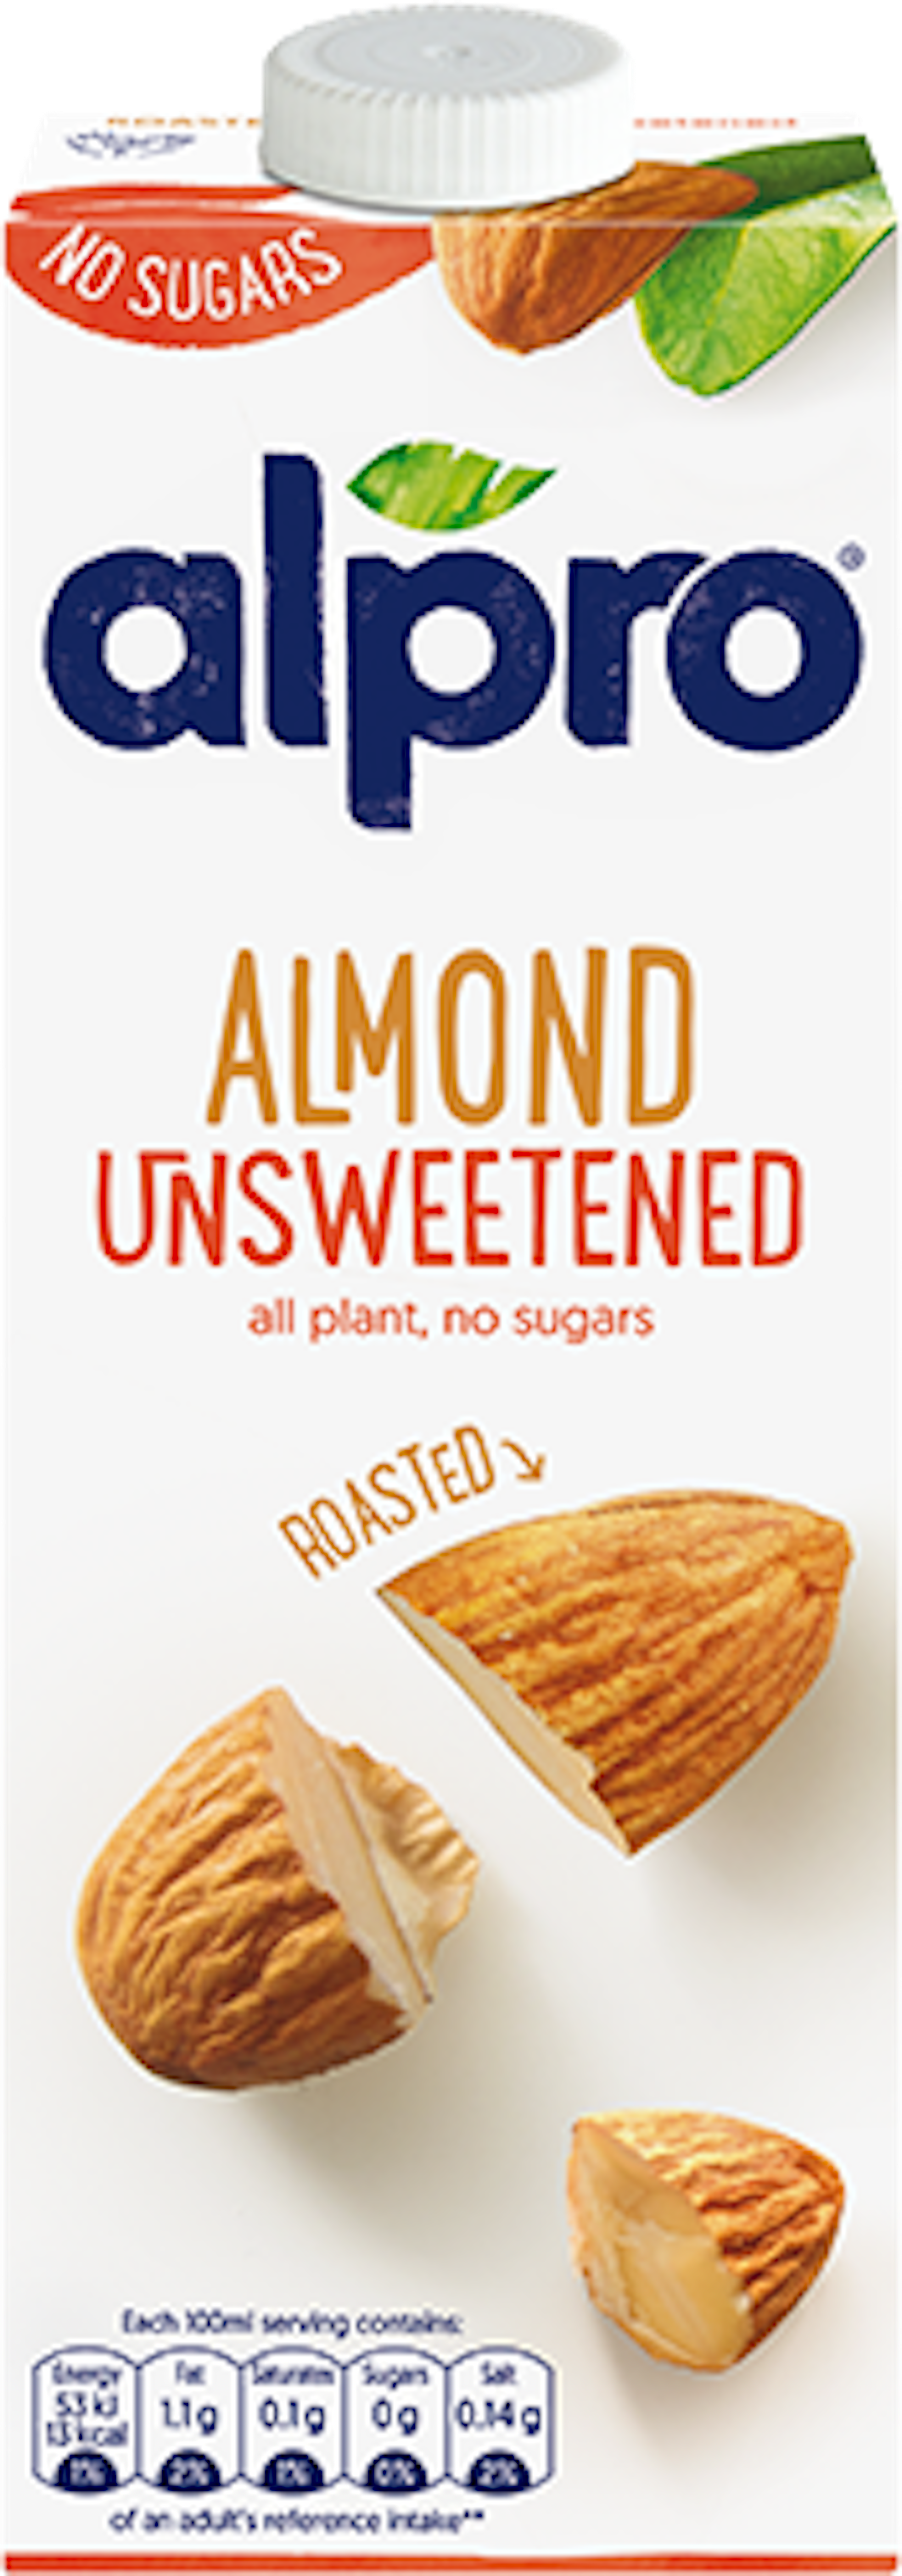 Almond unsweetened roasted 1 liter